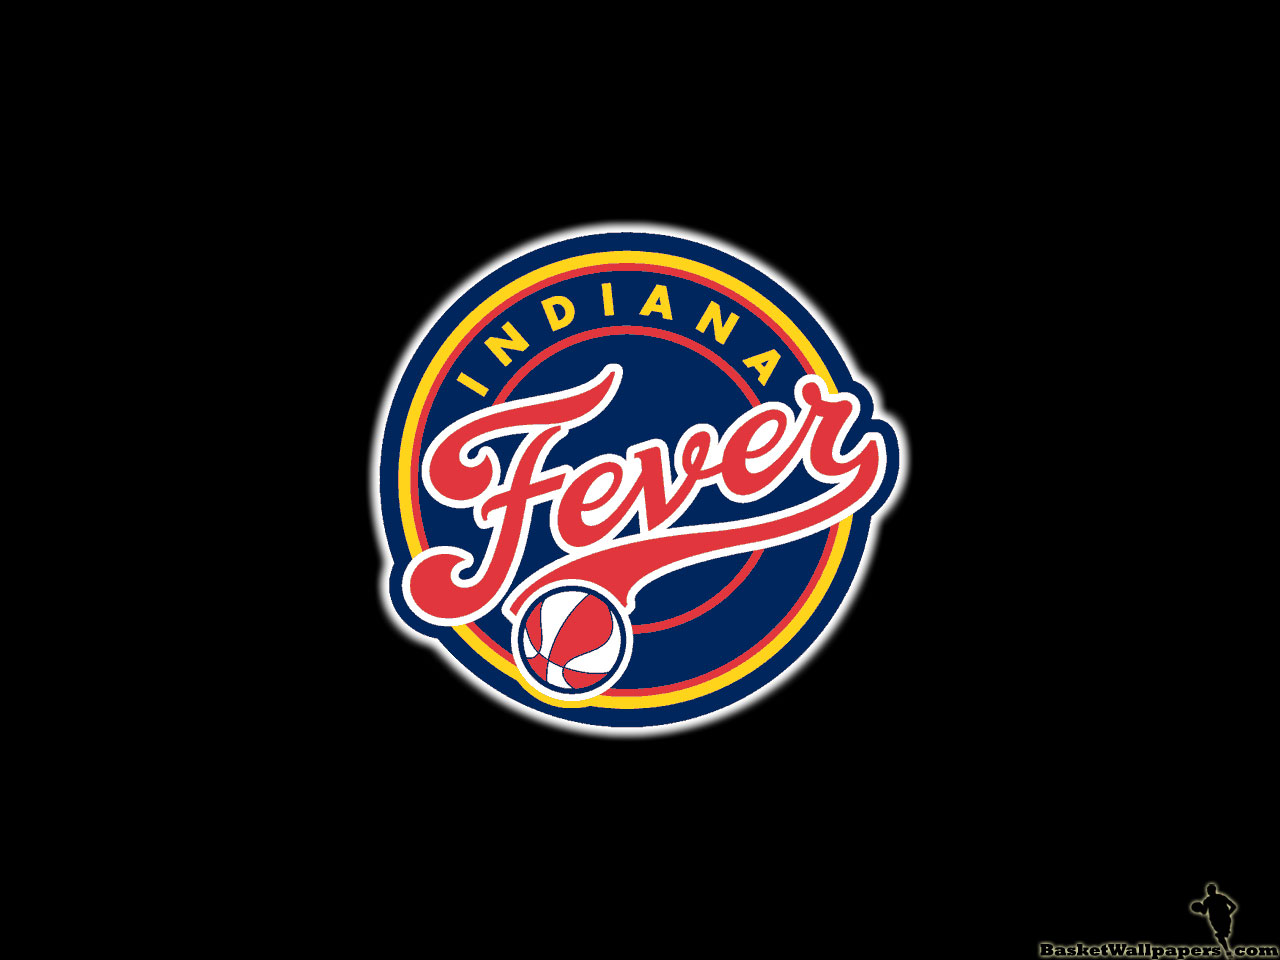 Indiana Fever JungleKey.fr Wiki